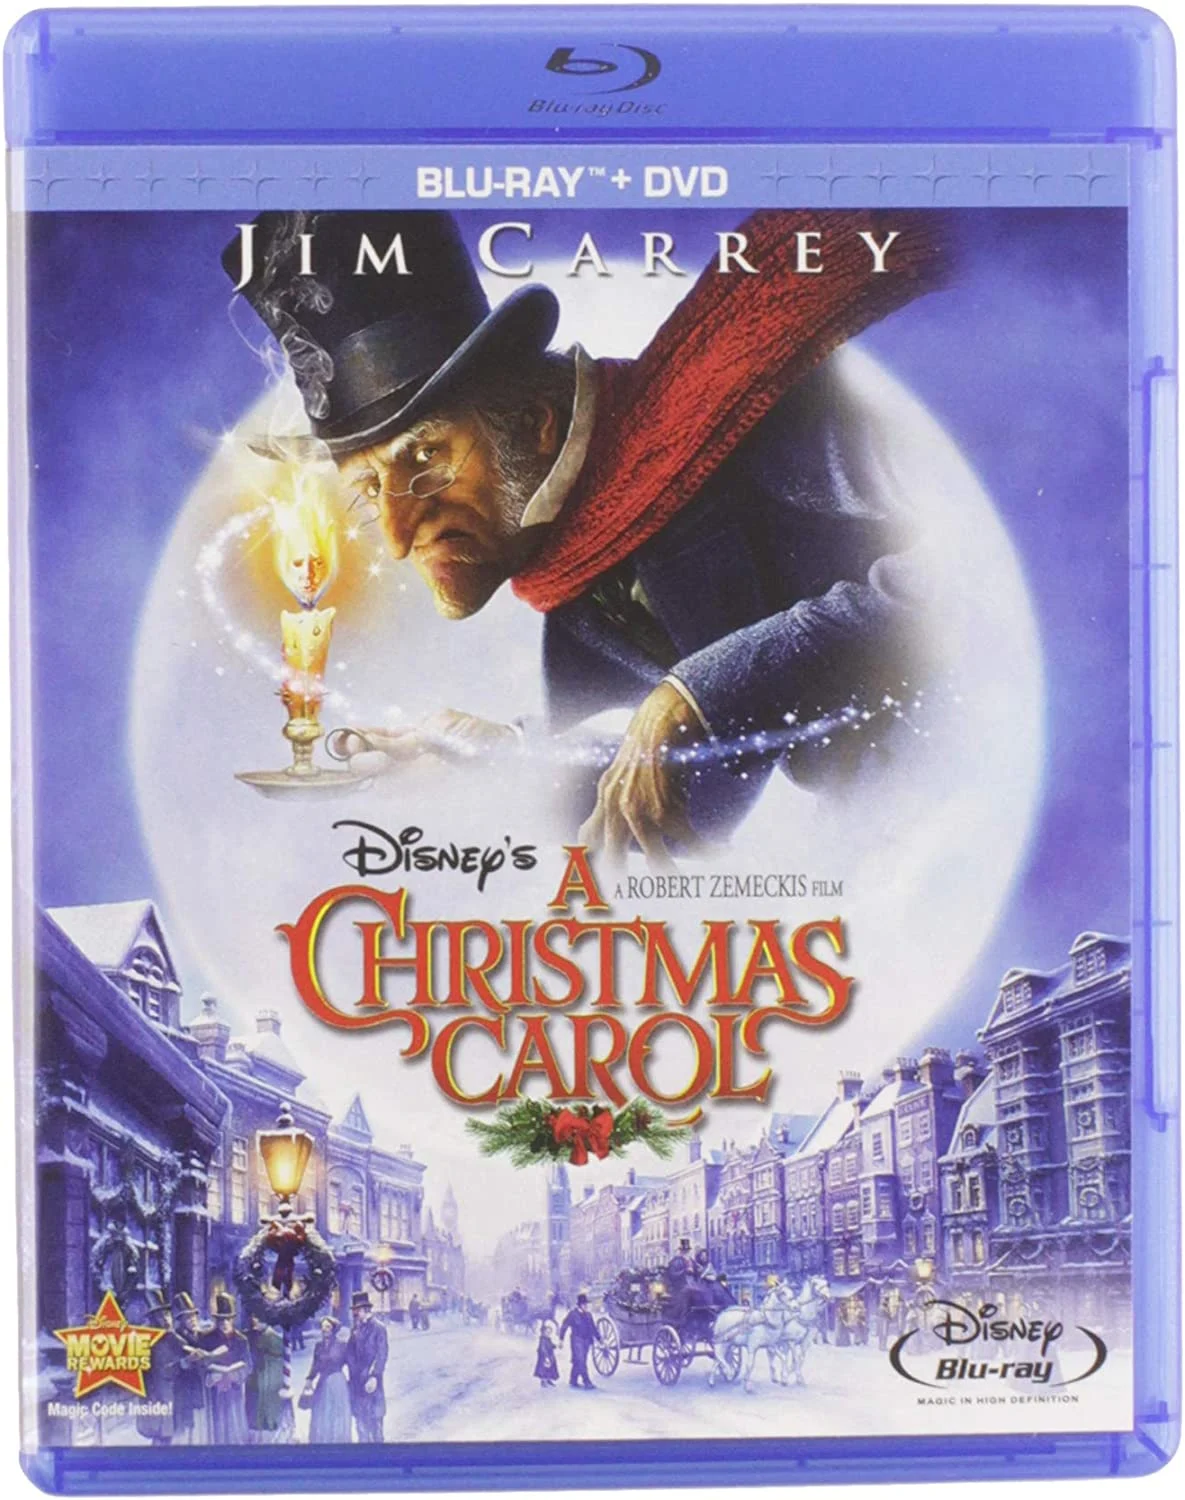 Disney’s A Christmas Carol (Blu-ray/DVD Combo) on MovieShack